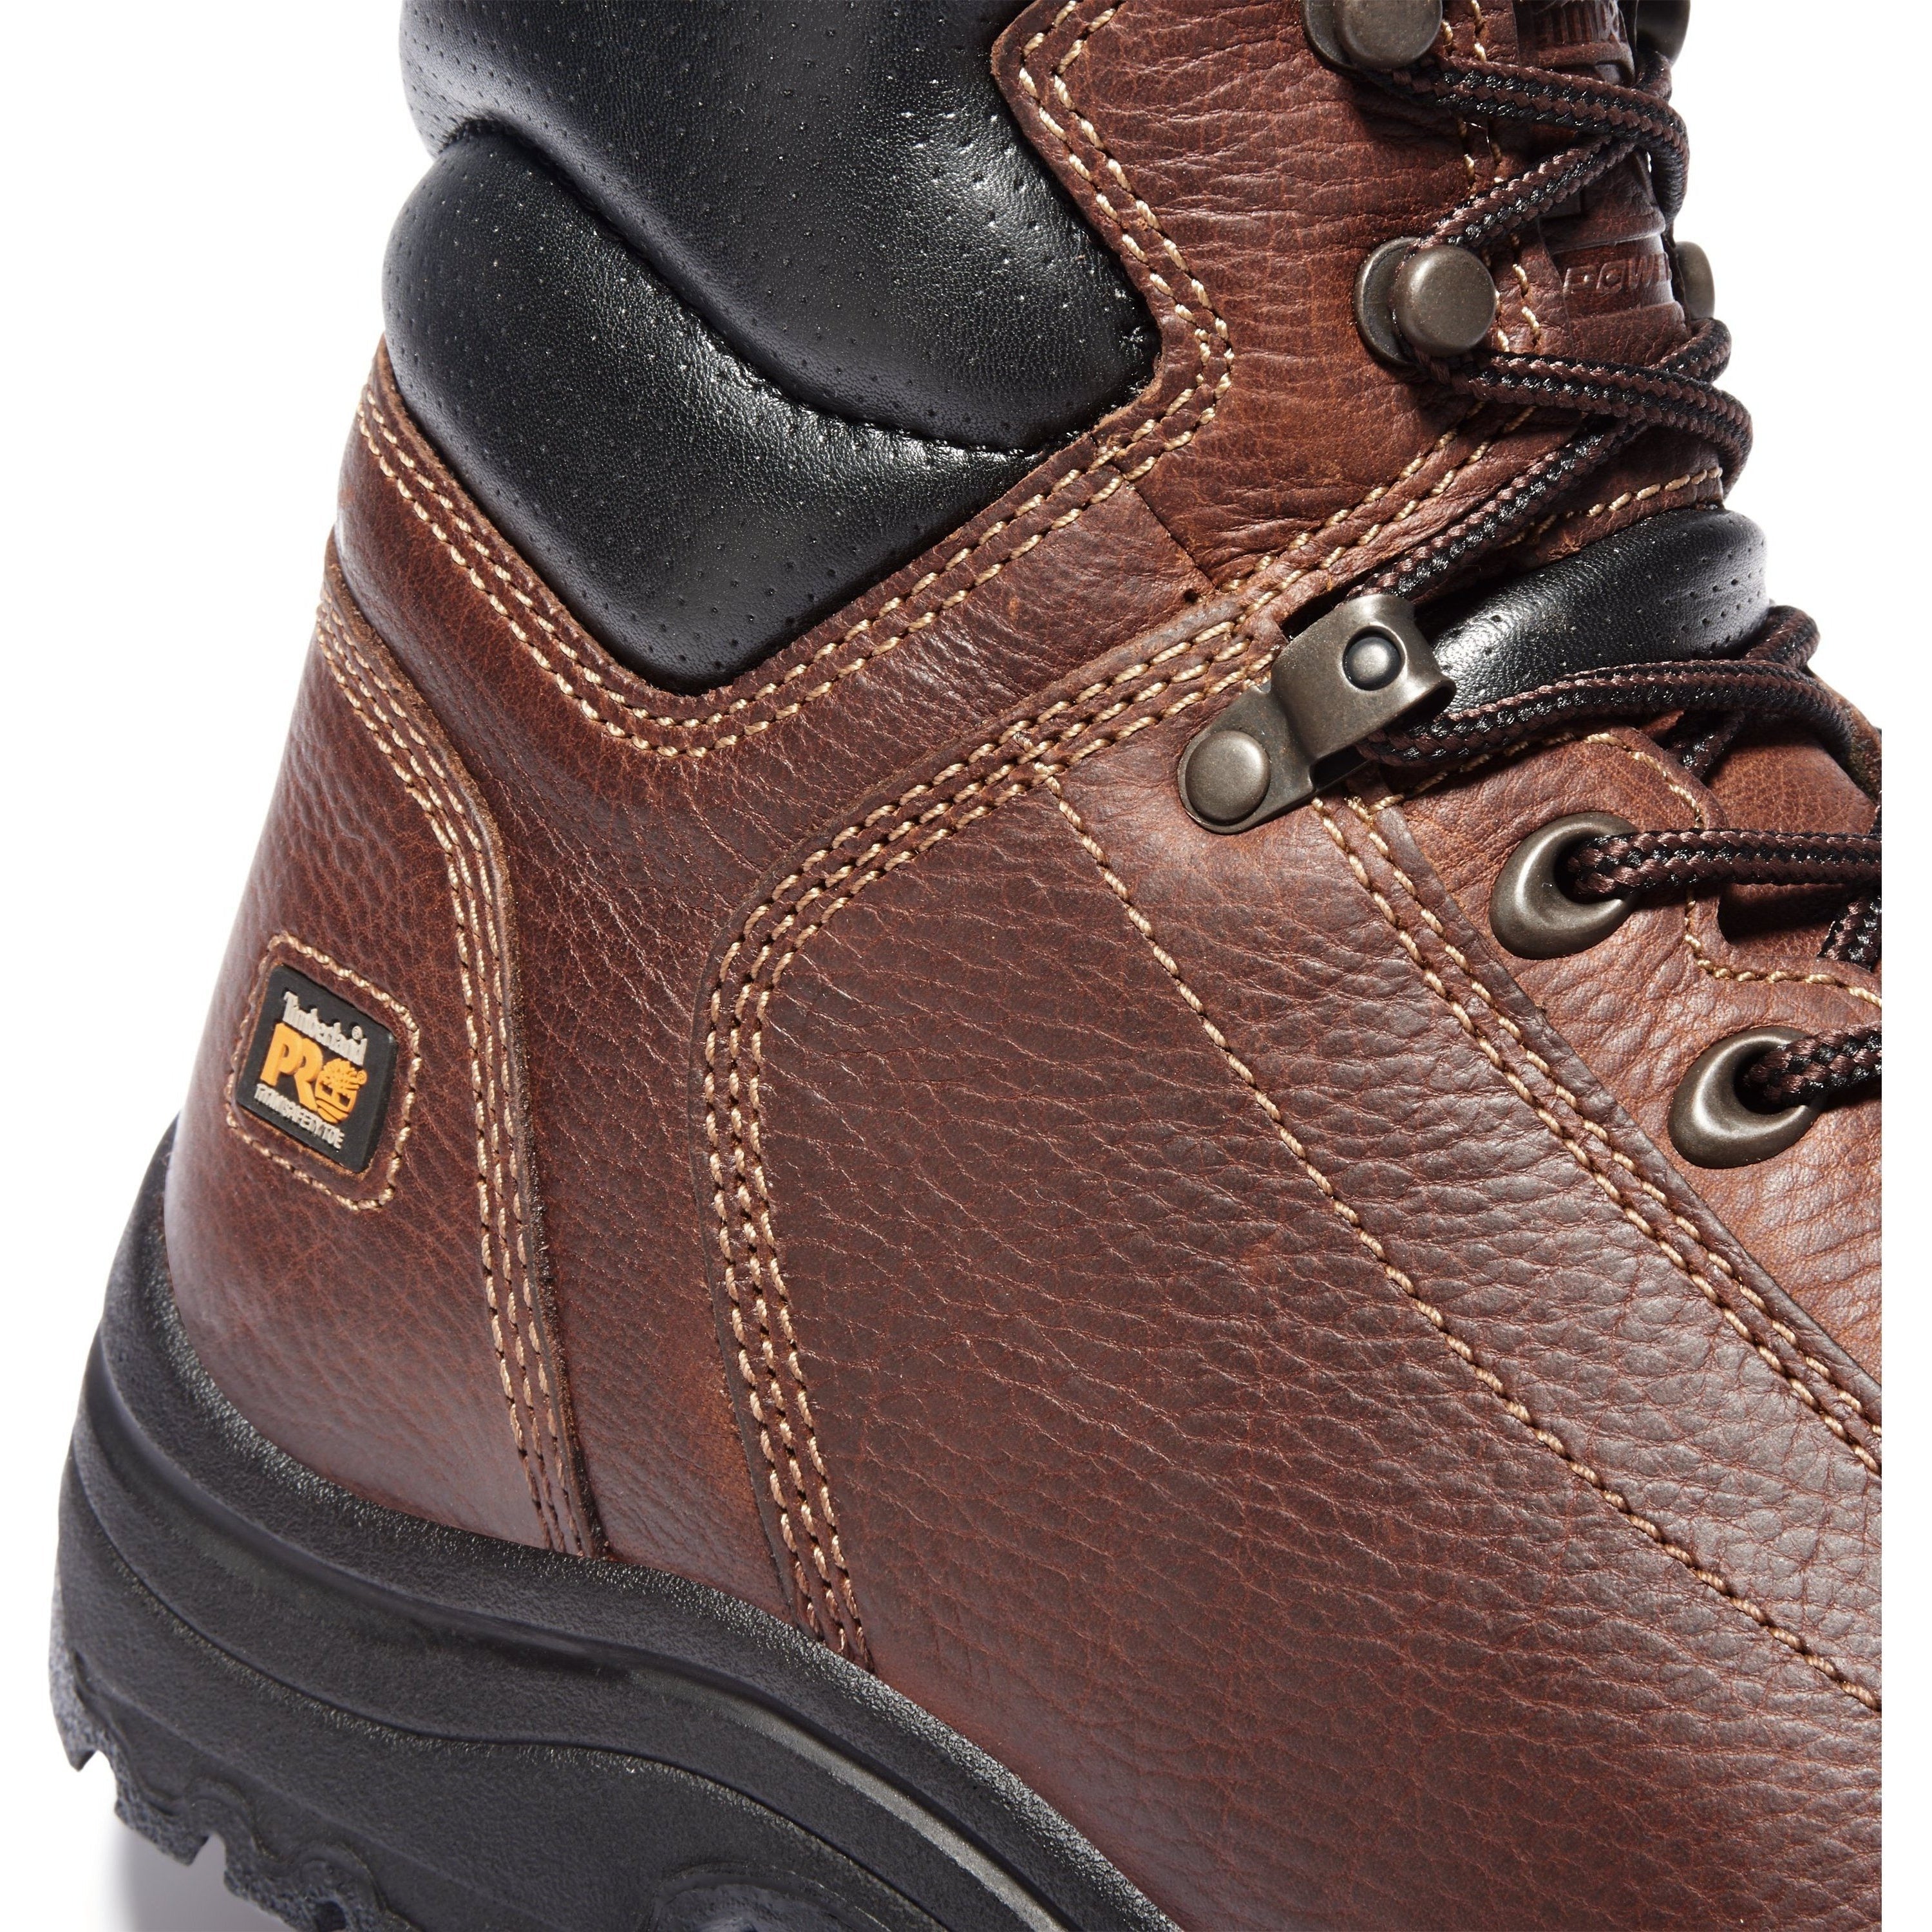 Timberland PRO Men's TiTAN 6" Alloy Toe Work Boots -Brown- TB150506242  - Overlook Boots